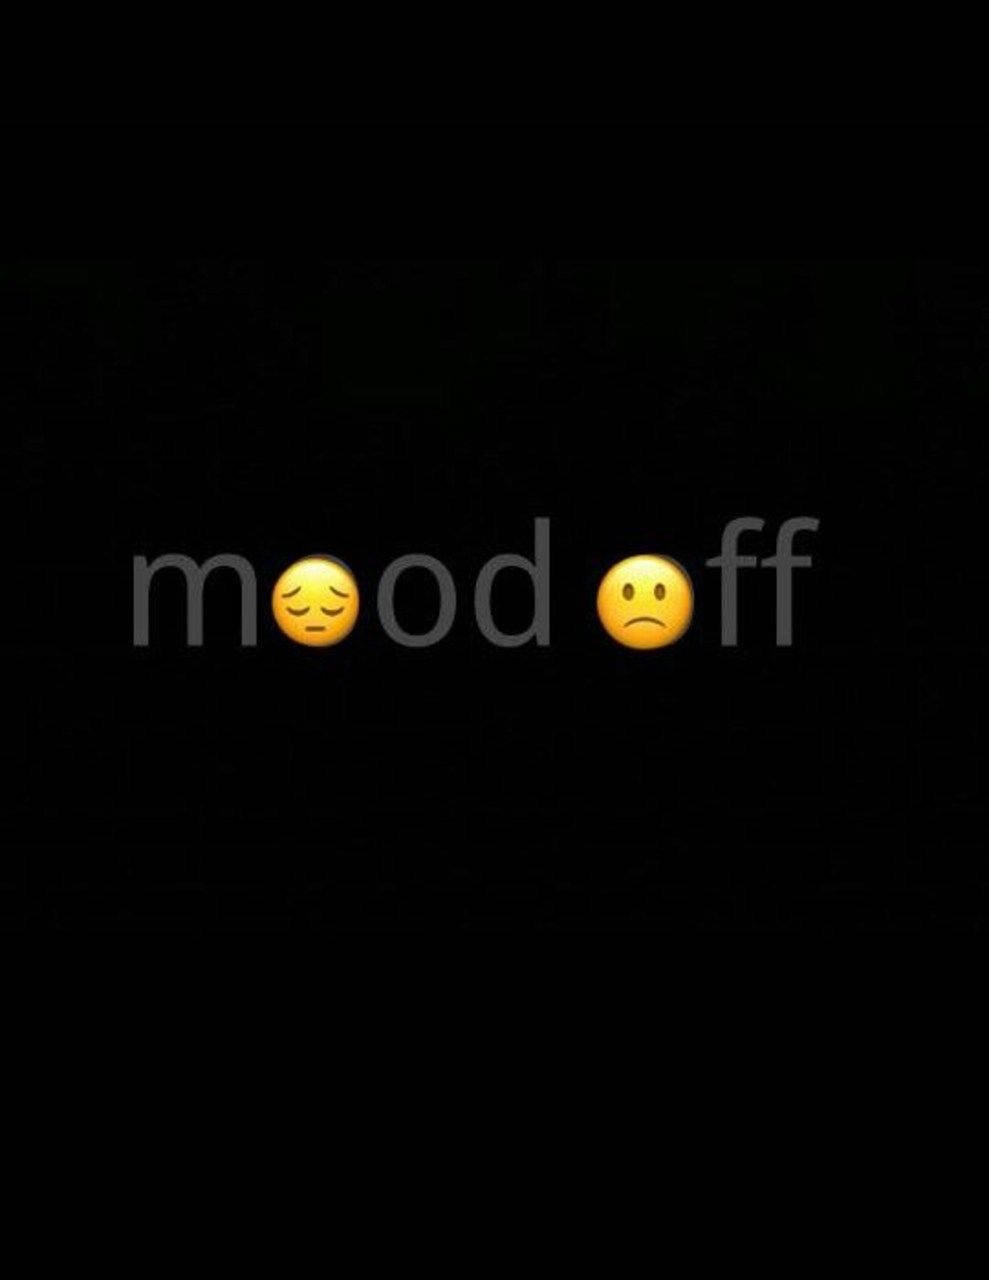 Mood Off With Sad Emojis Background